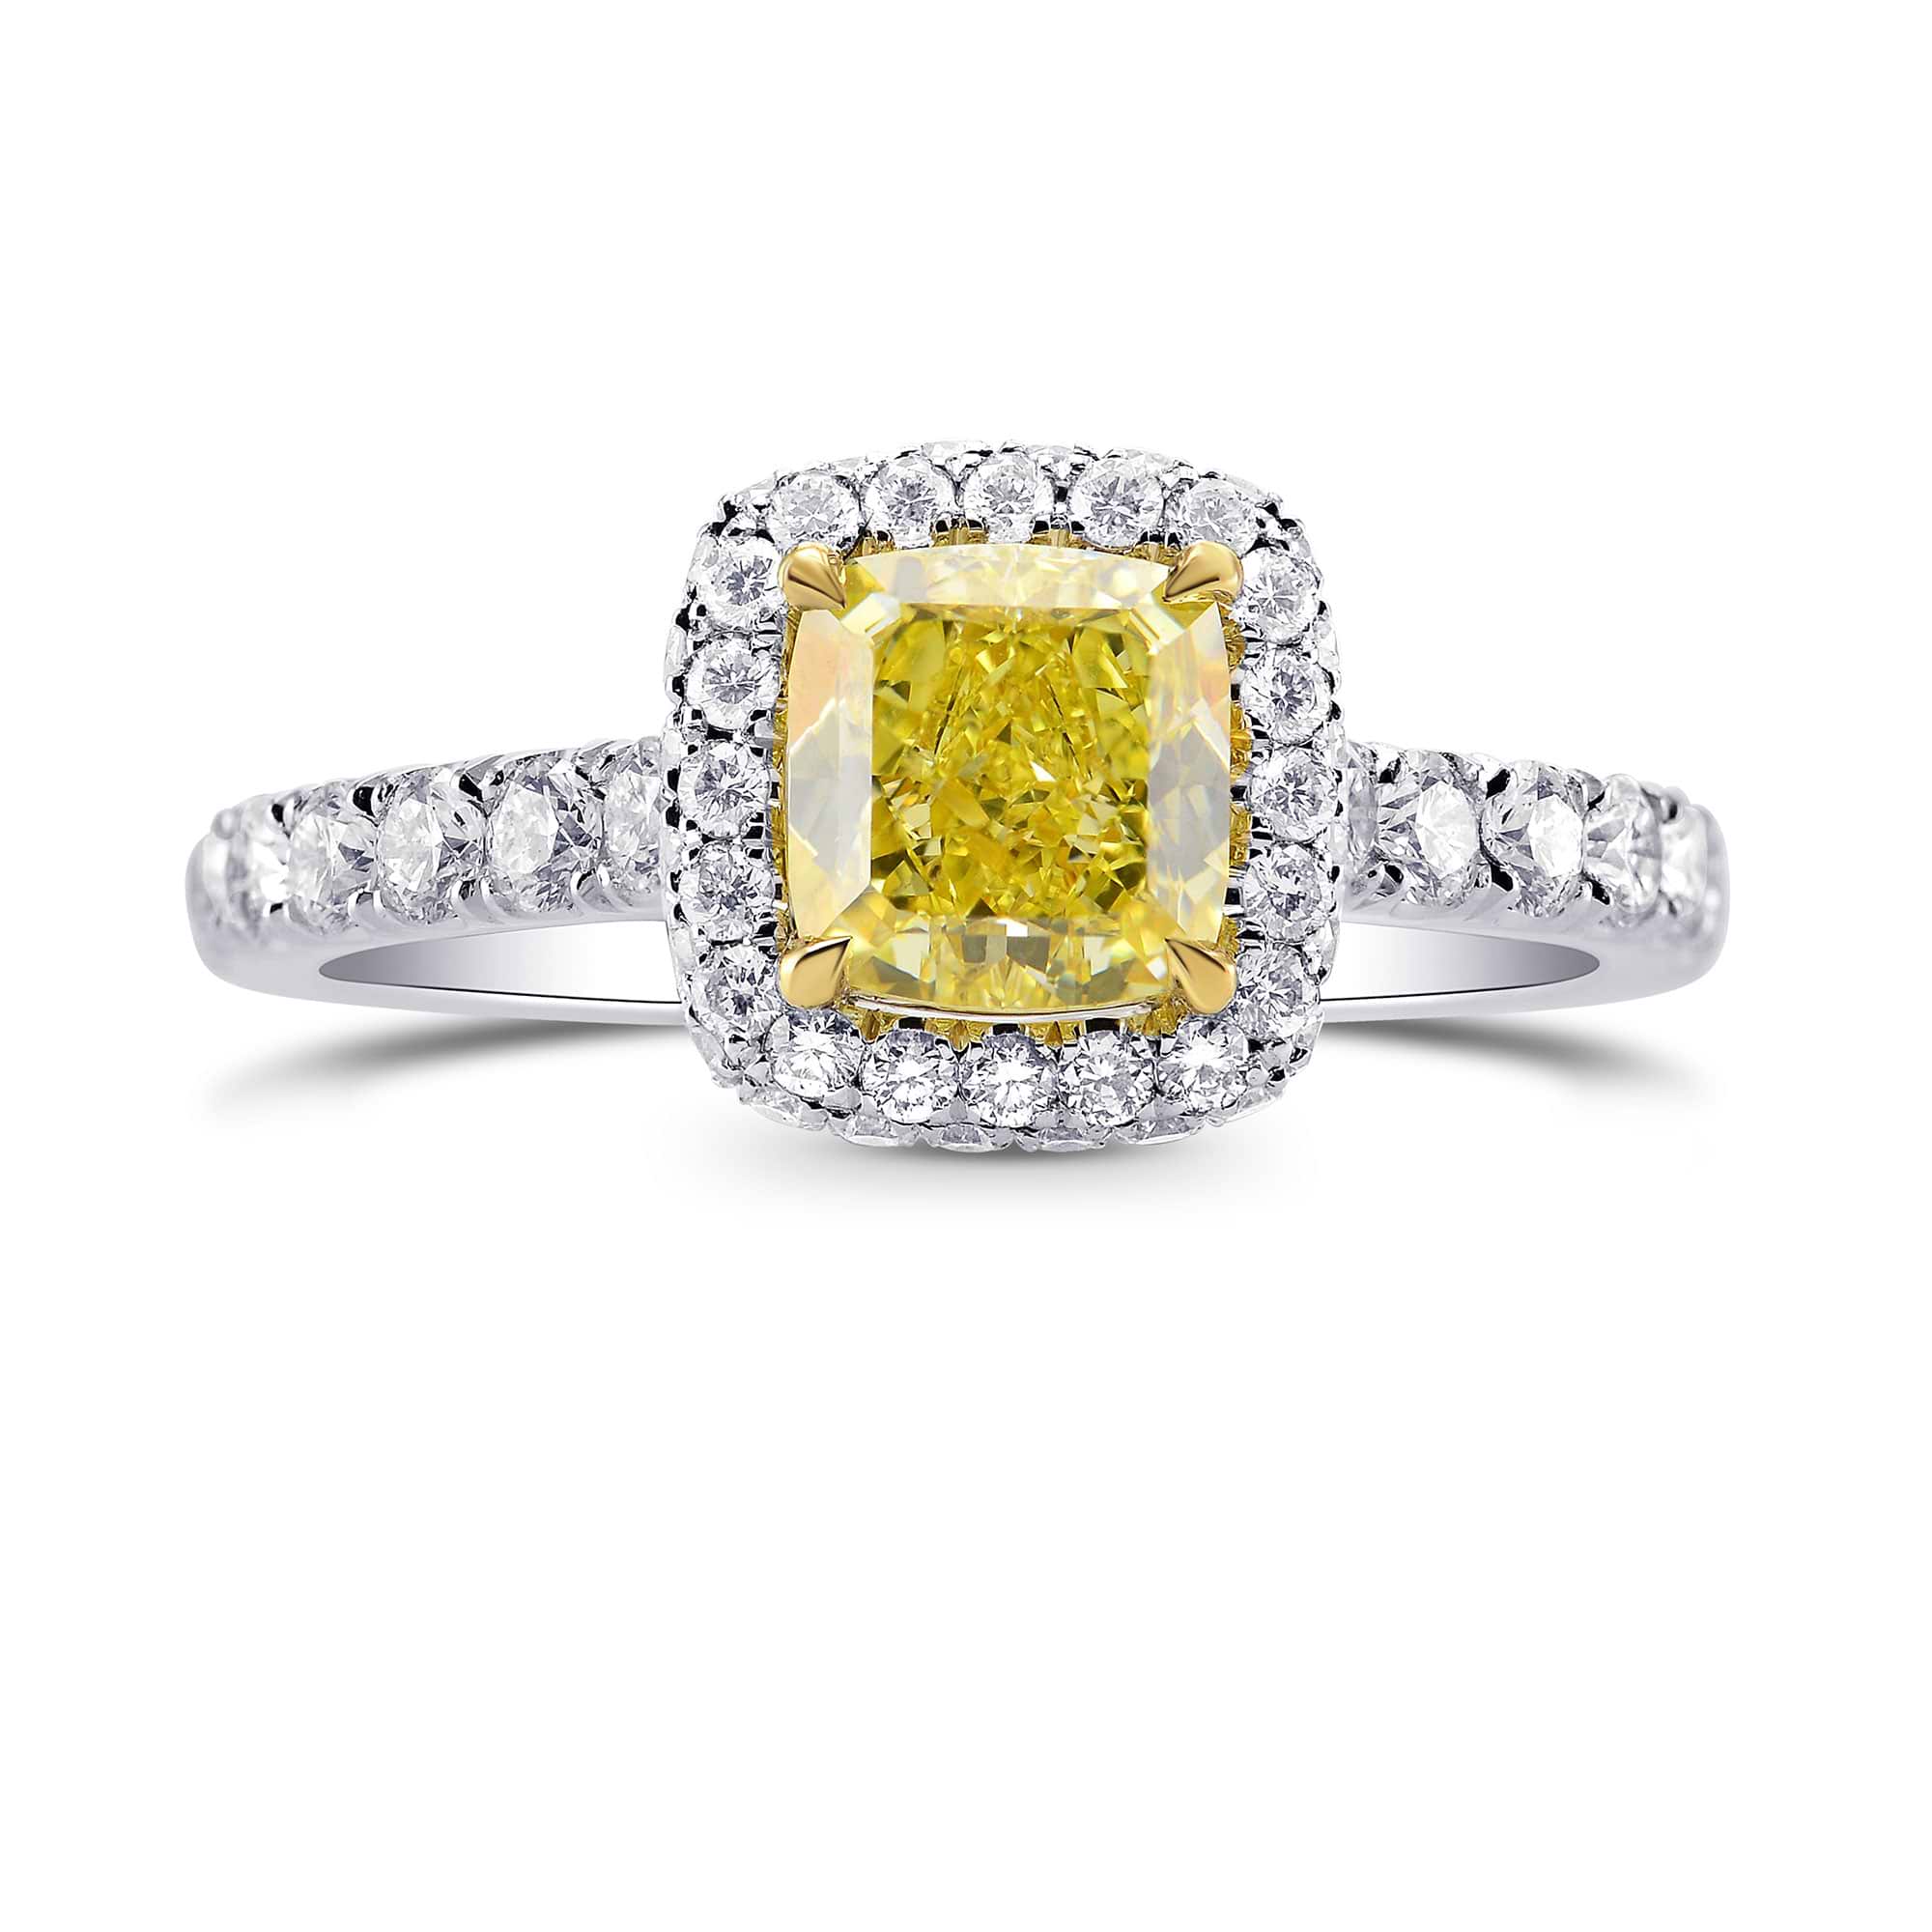 Fancy Yellow Cushion Diamond Ring, SKU 280688 (1.73Ct TW)